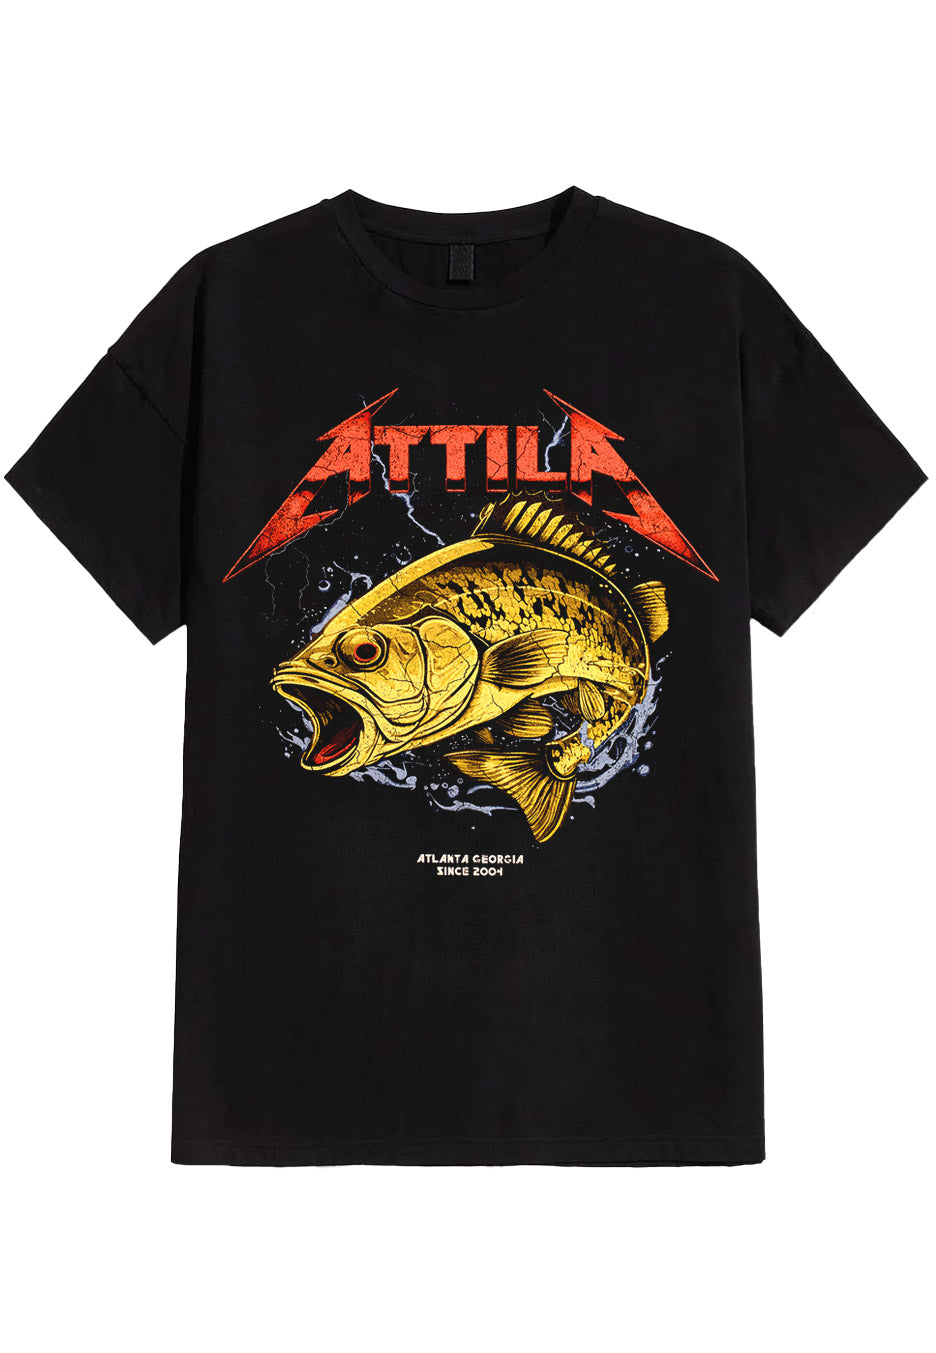 Attila - Large Mouth Bass - T-Shirt | Neutral-Image